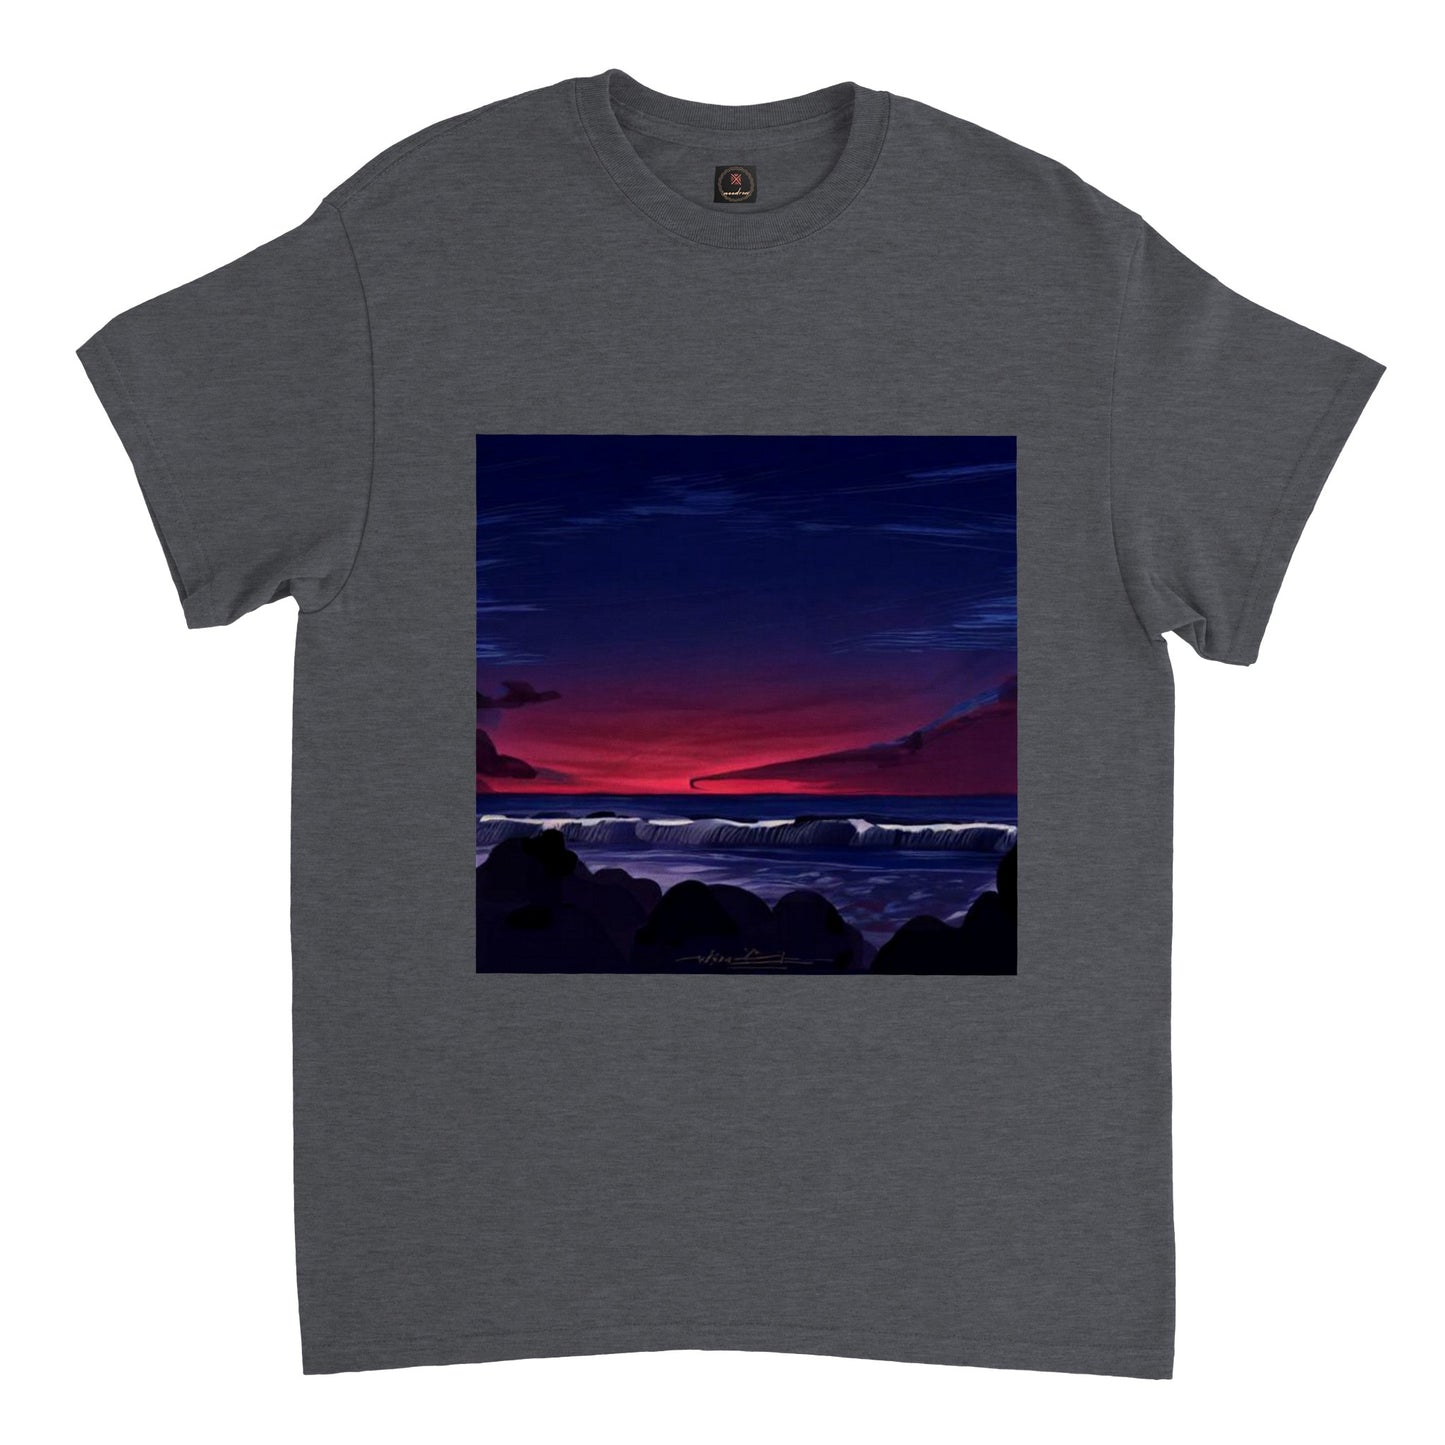 Heavyweight Unisex Crewneck T-shirt "Romance of the Ocean"